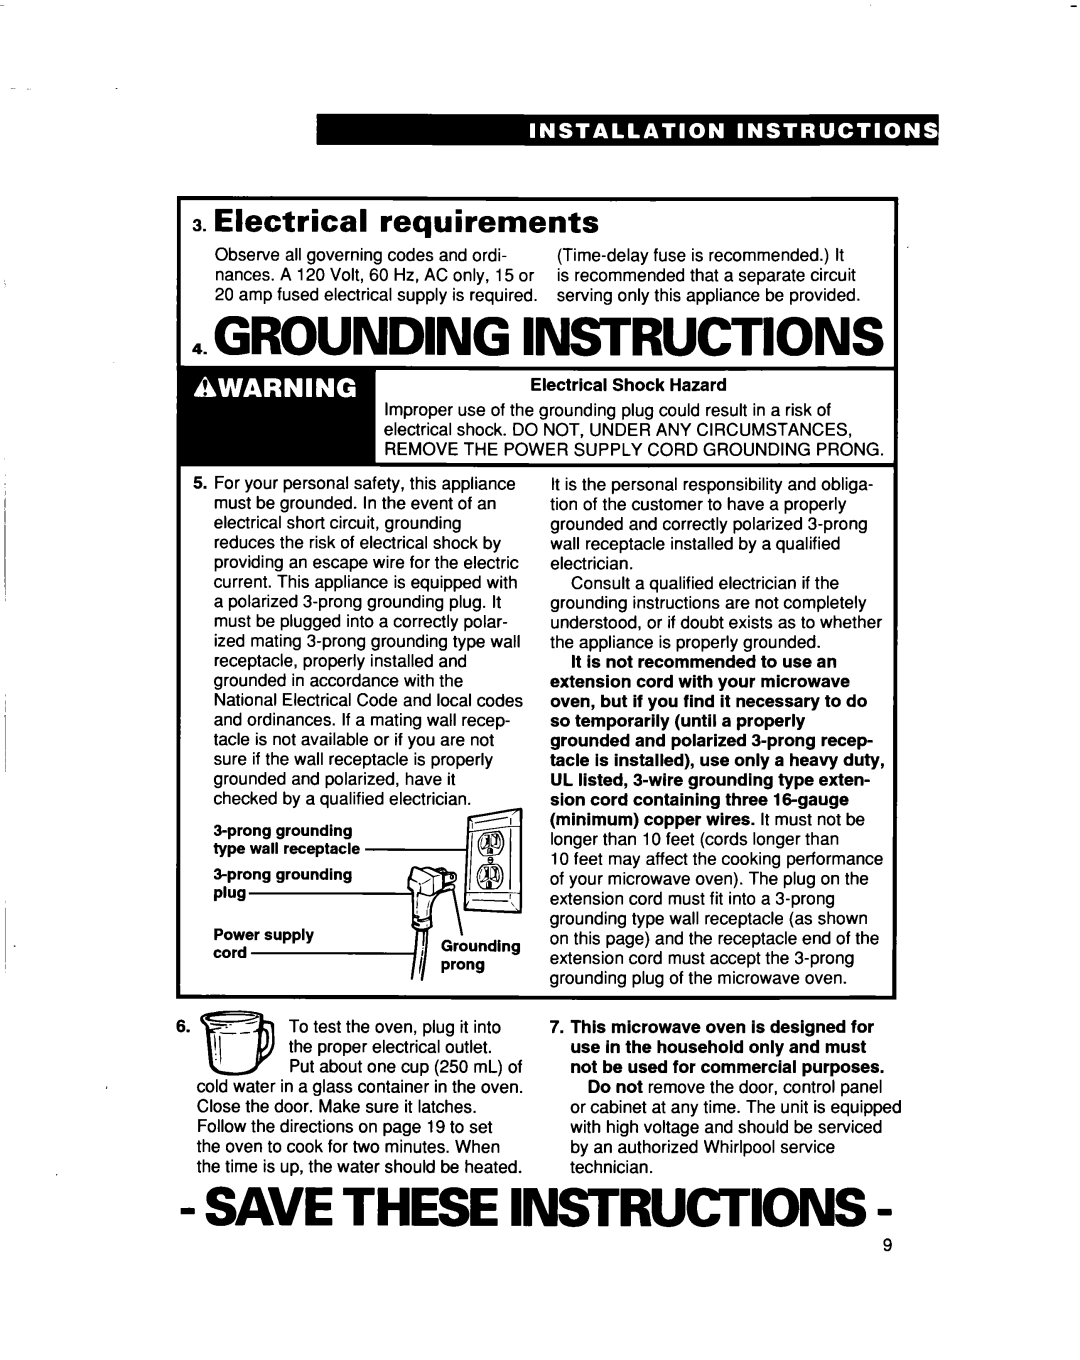 Whirlpool MT5120XAQ installation instructions 4GROUNDING. INSTRUCTIONS, Save These Instructions, Electrical requirements 